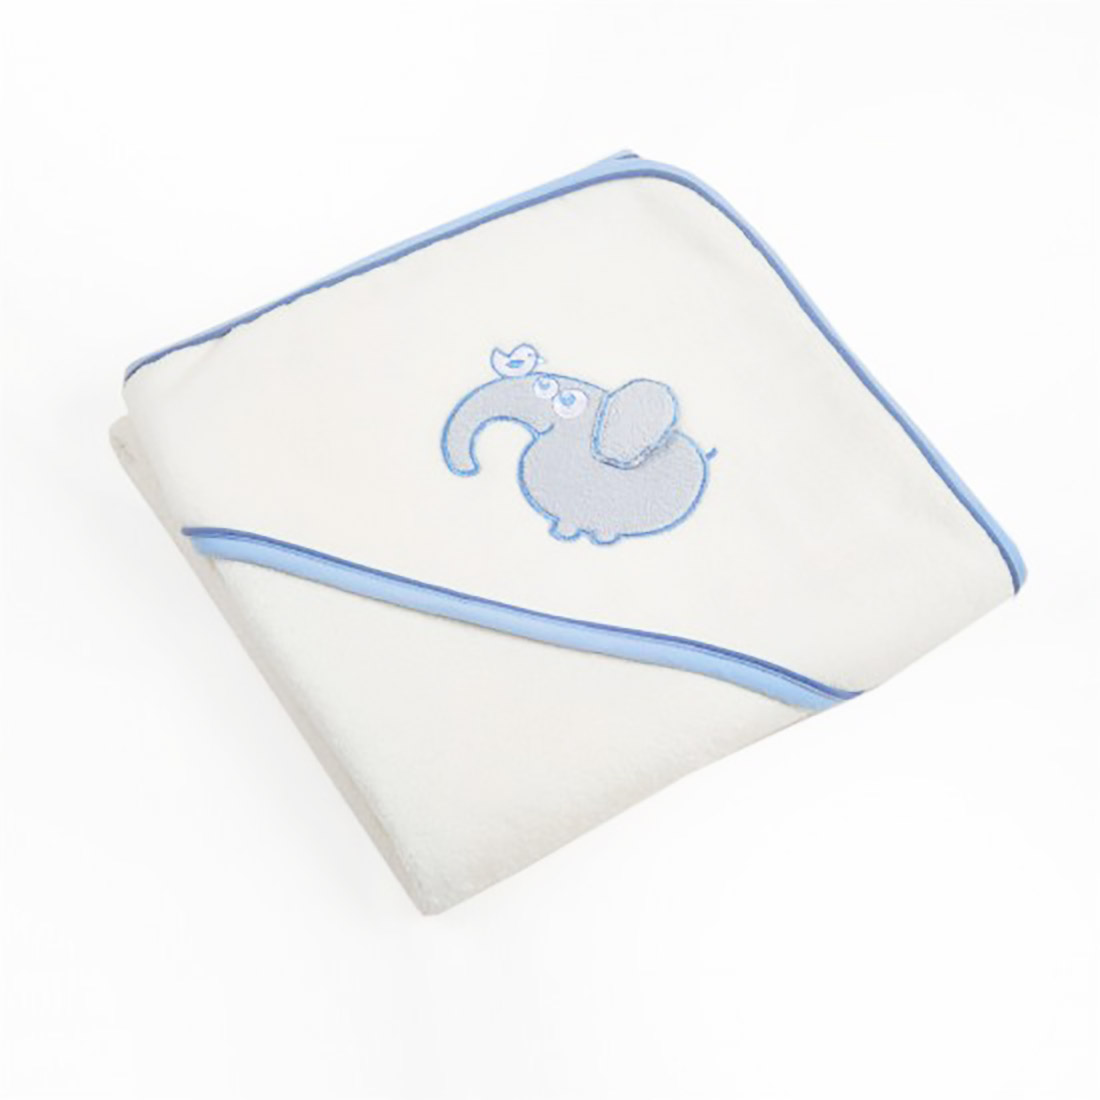 OrganicEra Organic Baby Hooded Towel, Blue Elephant